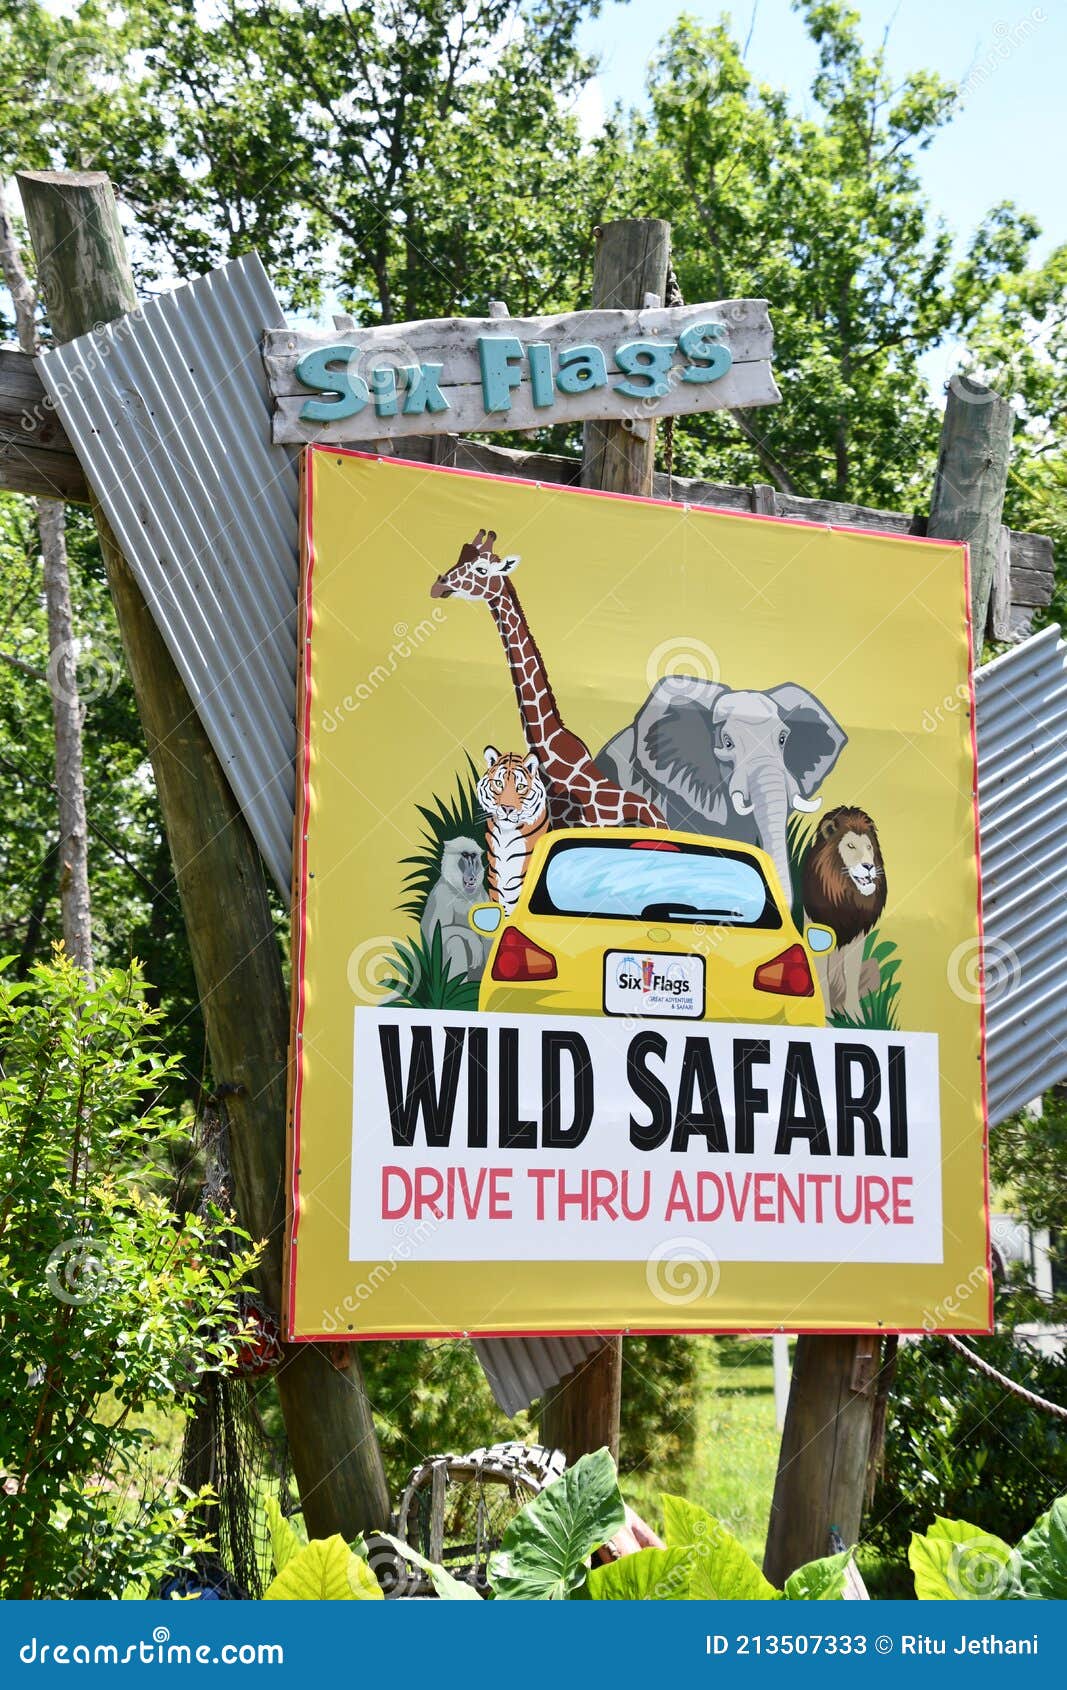 six flags safari drive through nj